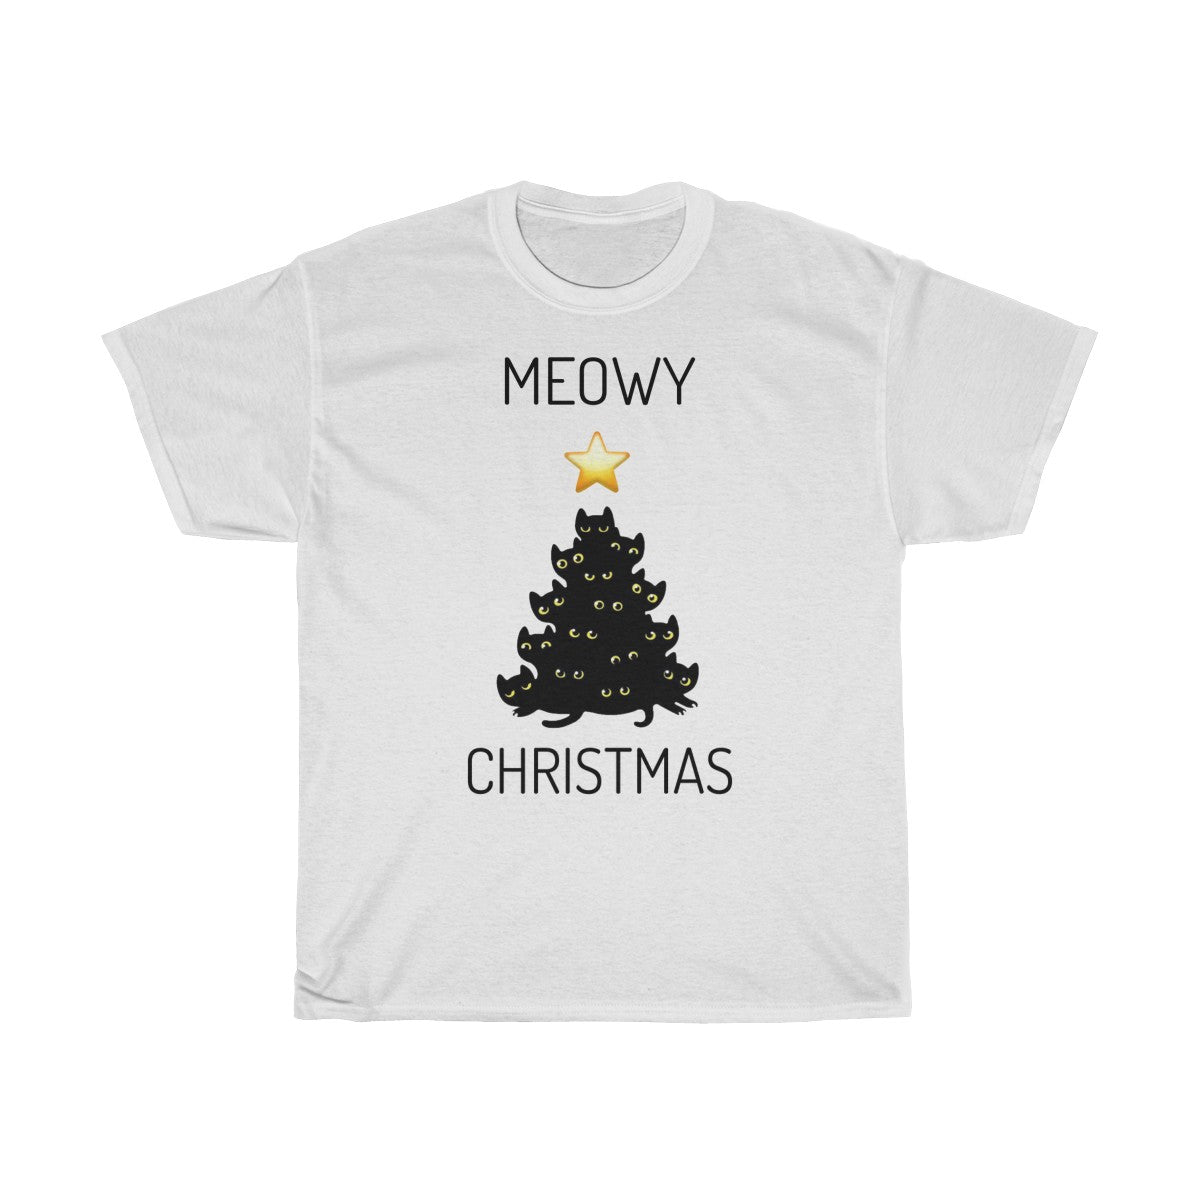 SquishBeans Meowy Christmas T-Shirt